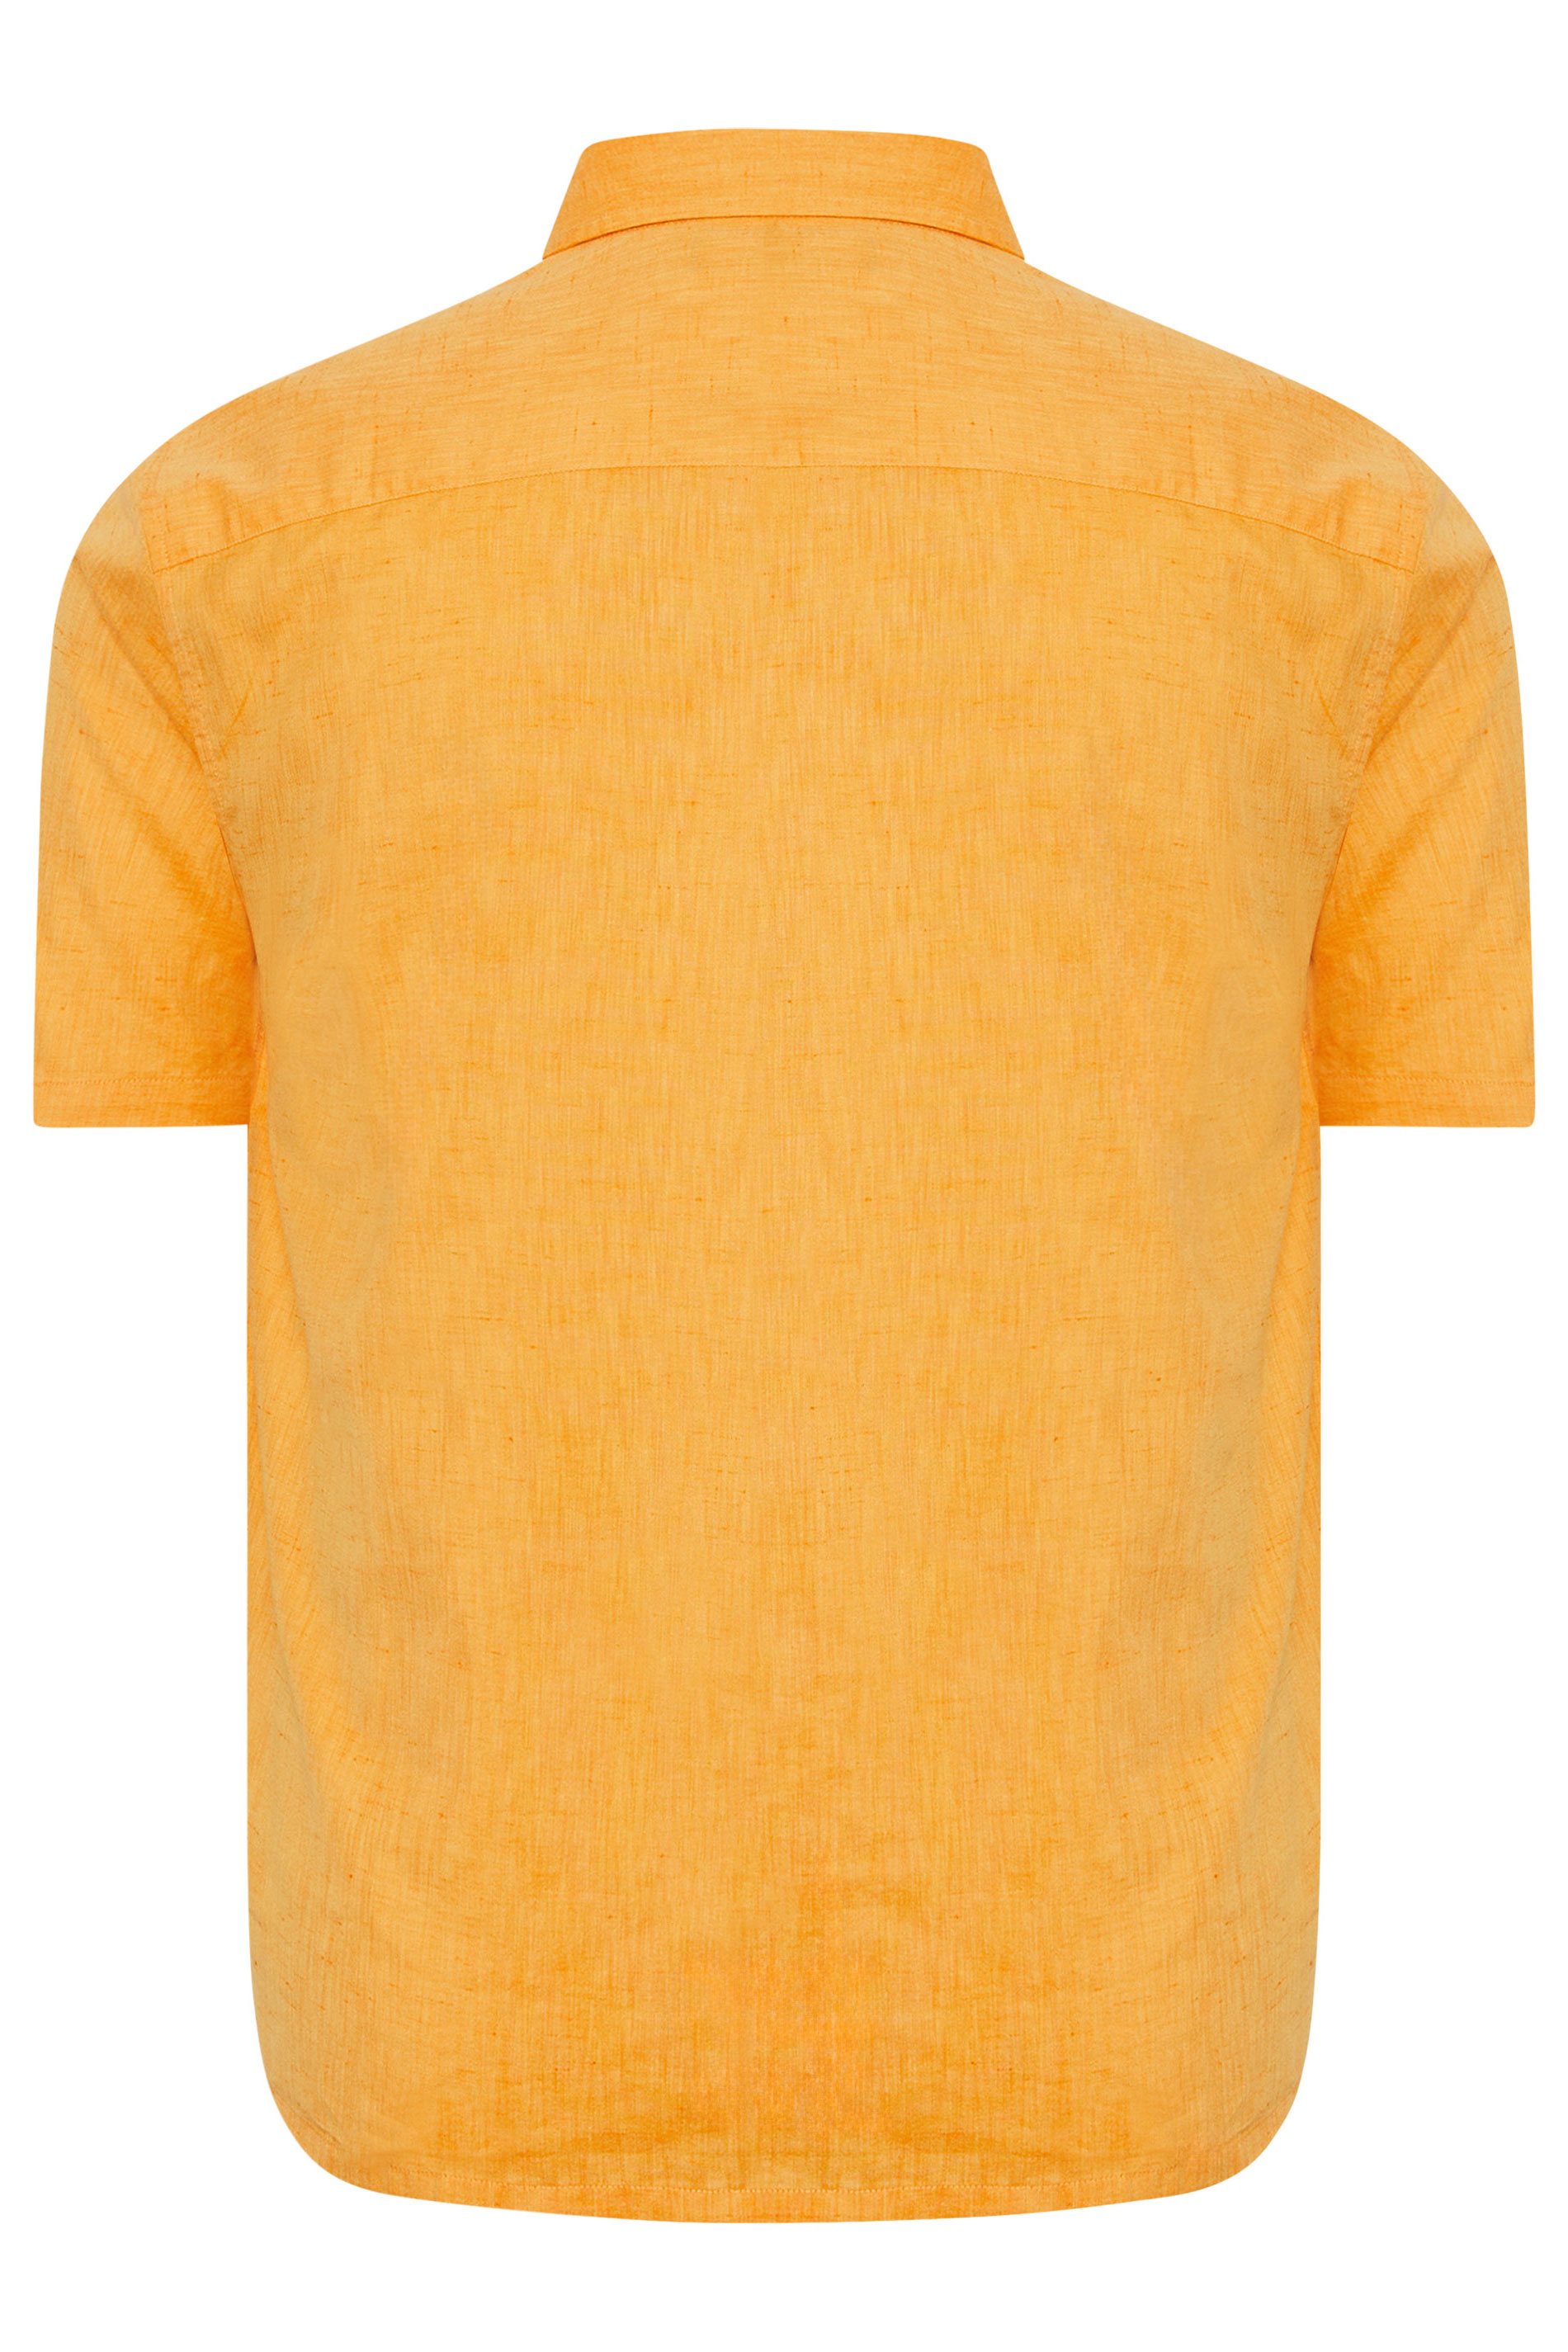 BadRhino Big & Tall Orange Marl Short Sleeve Shirt | BadRhino 3